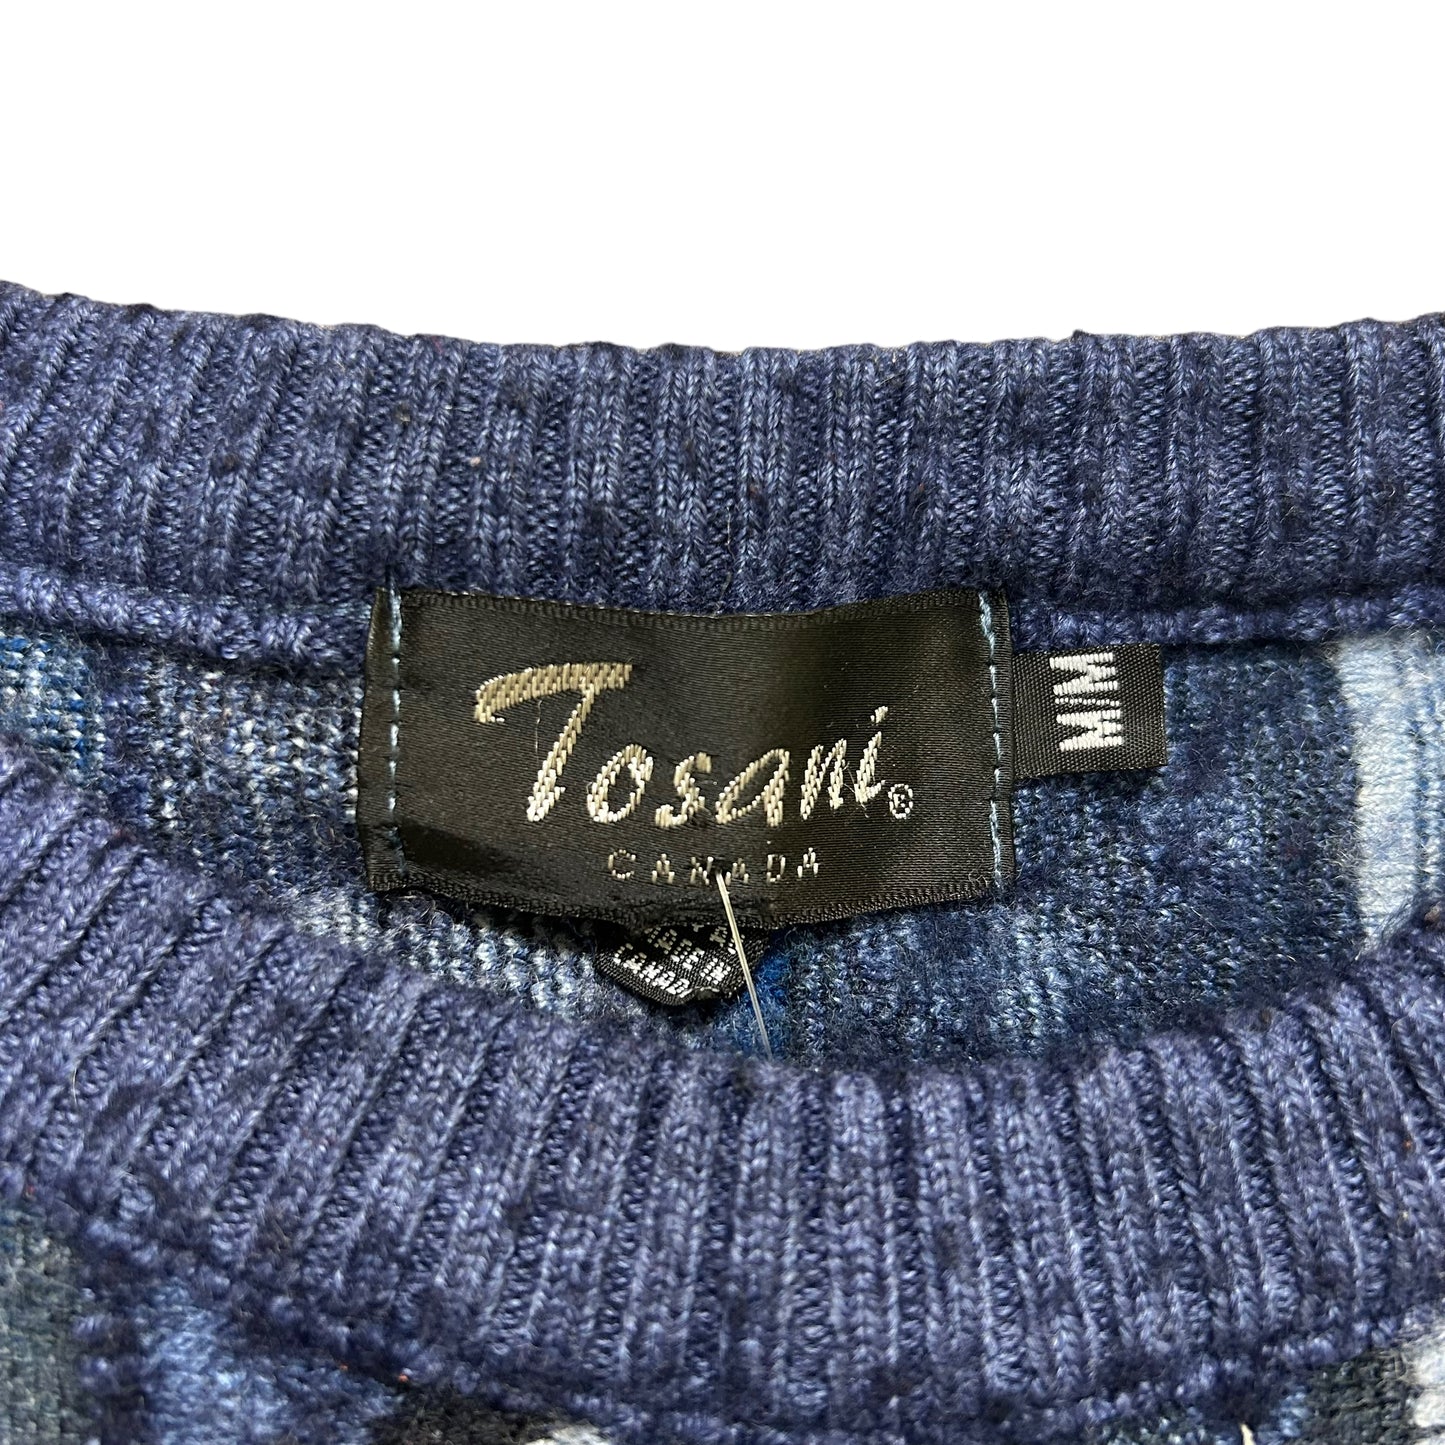 Vintage 1990s Tosani Canada Layered Design Blue Knit Sweater - Size Medium